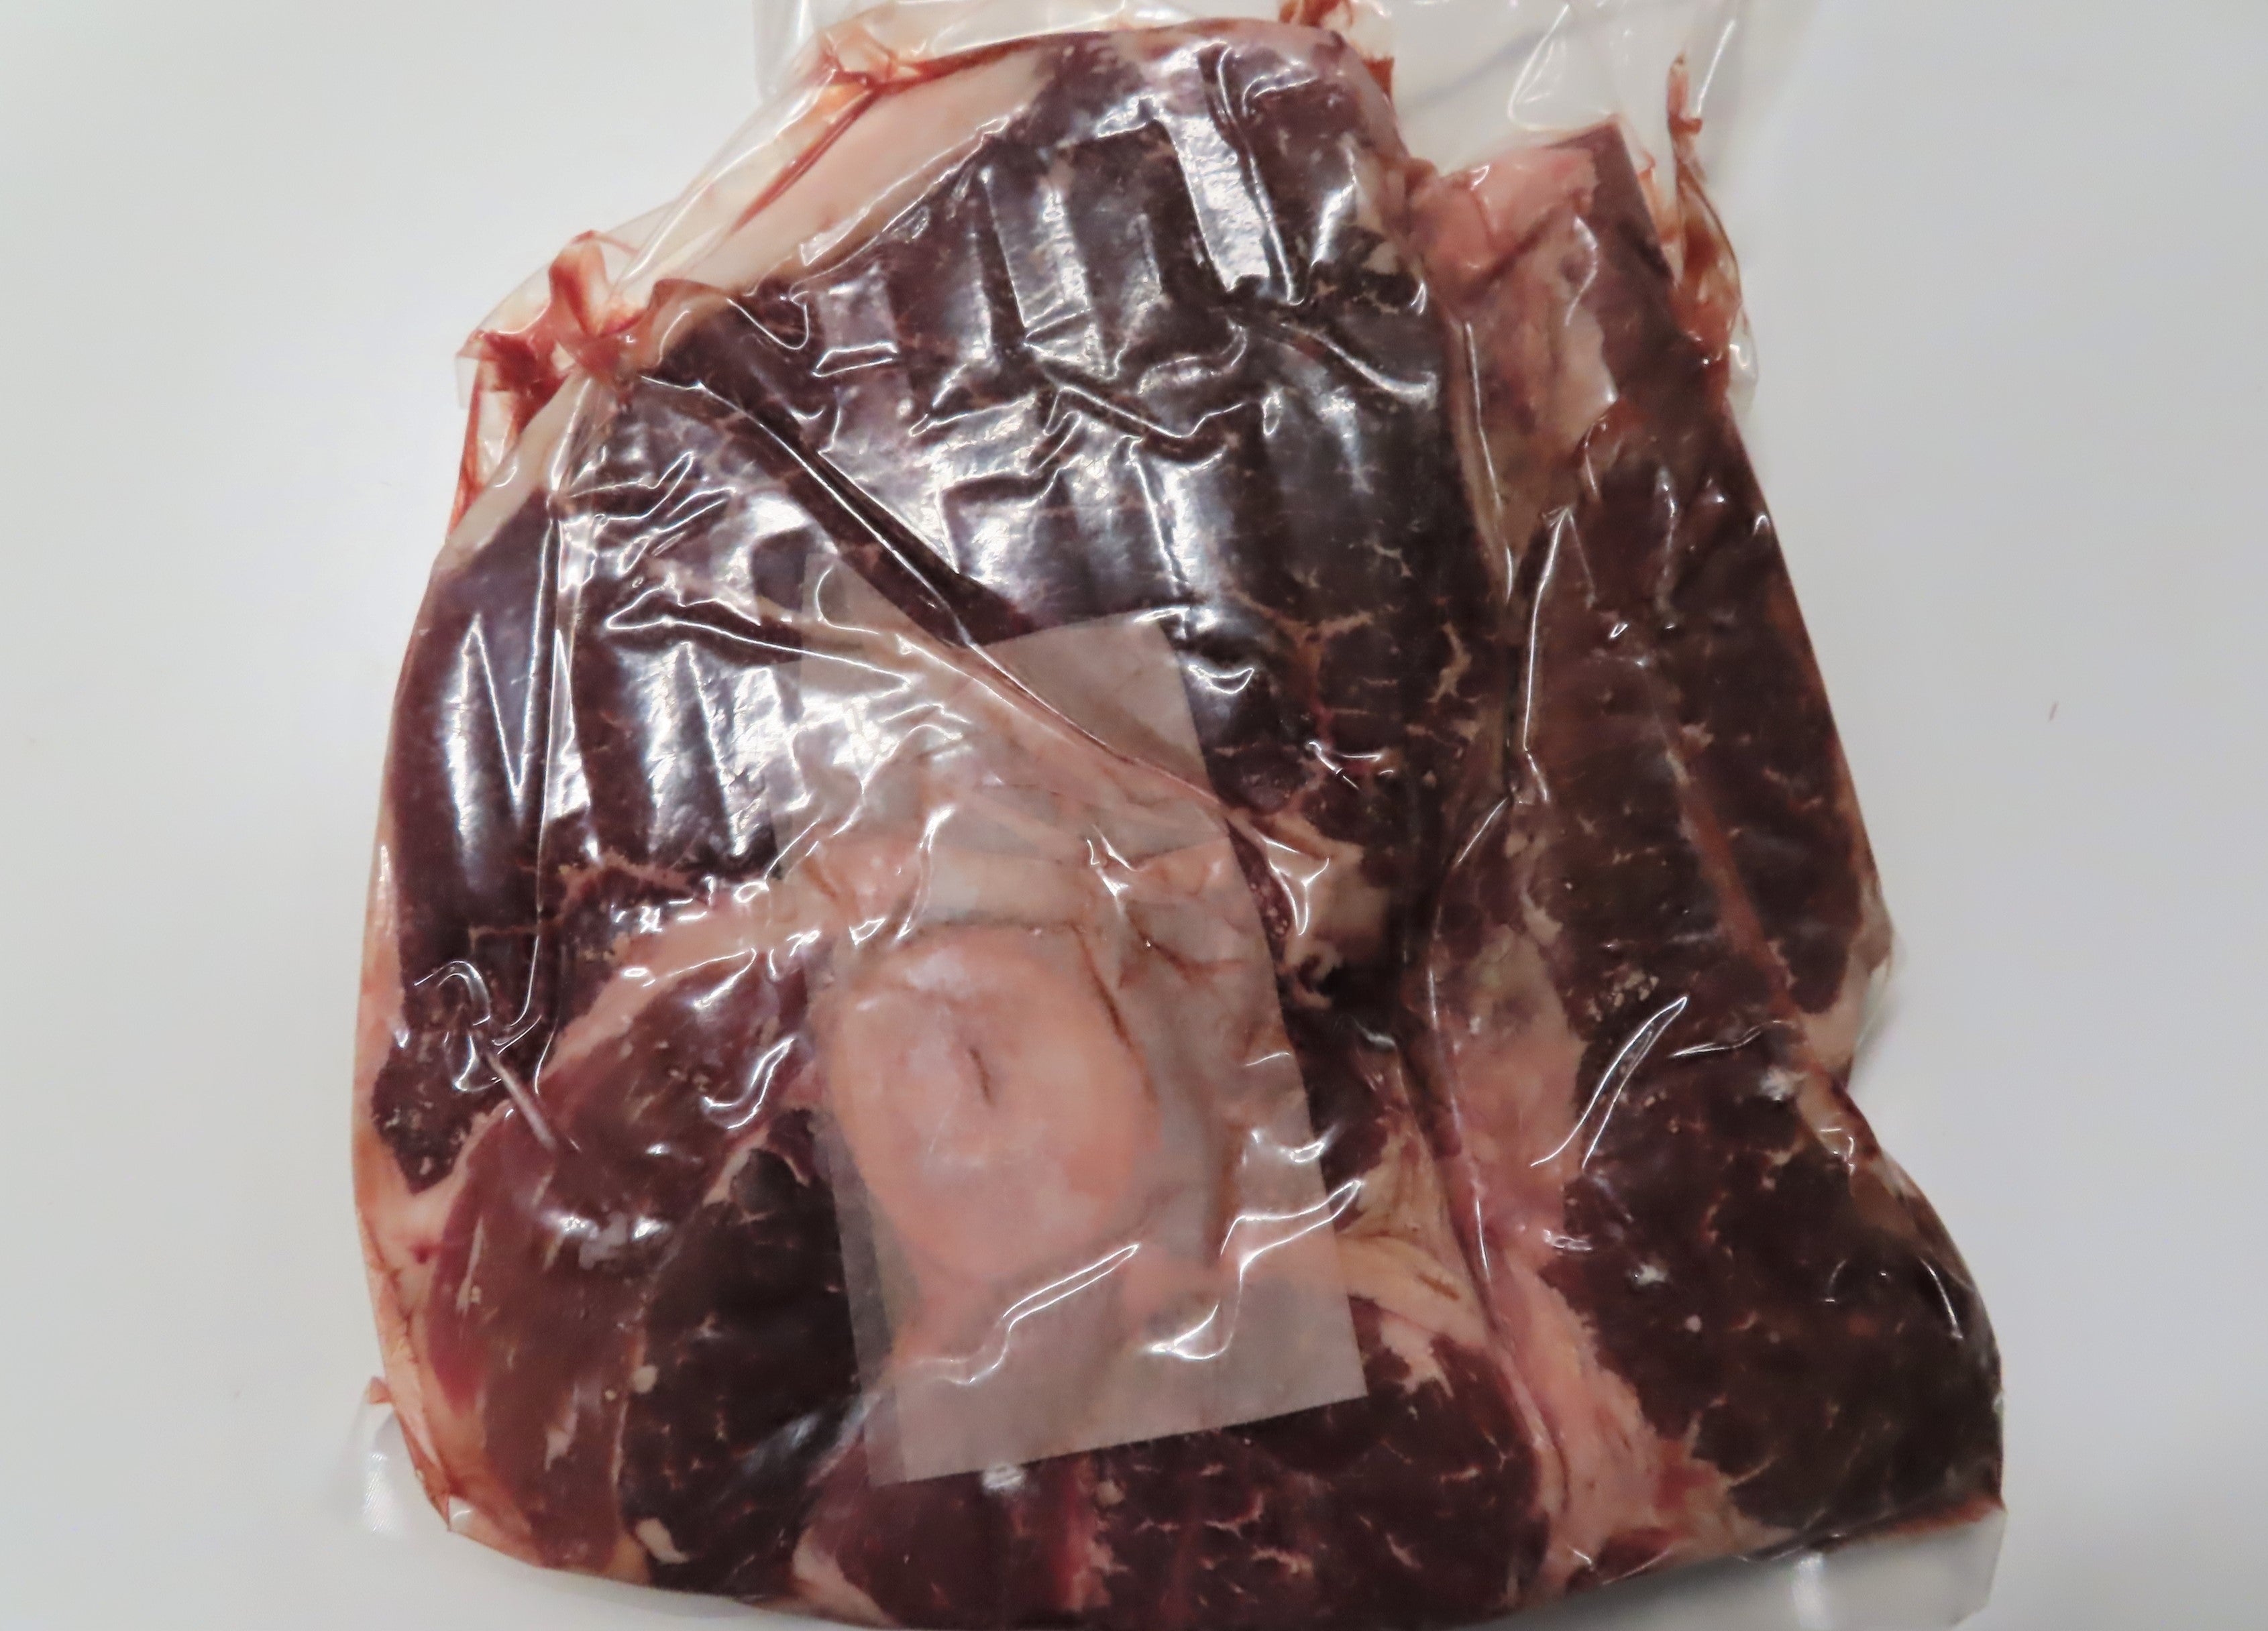 MSU Meat Labs Beef Arm Roast